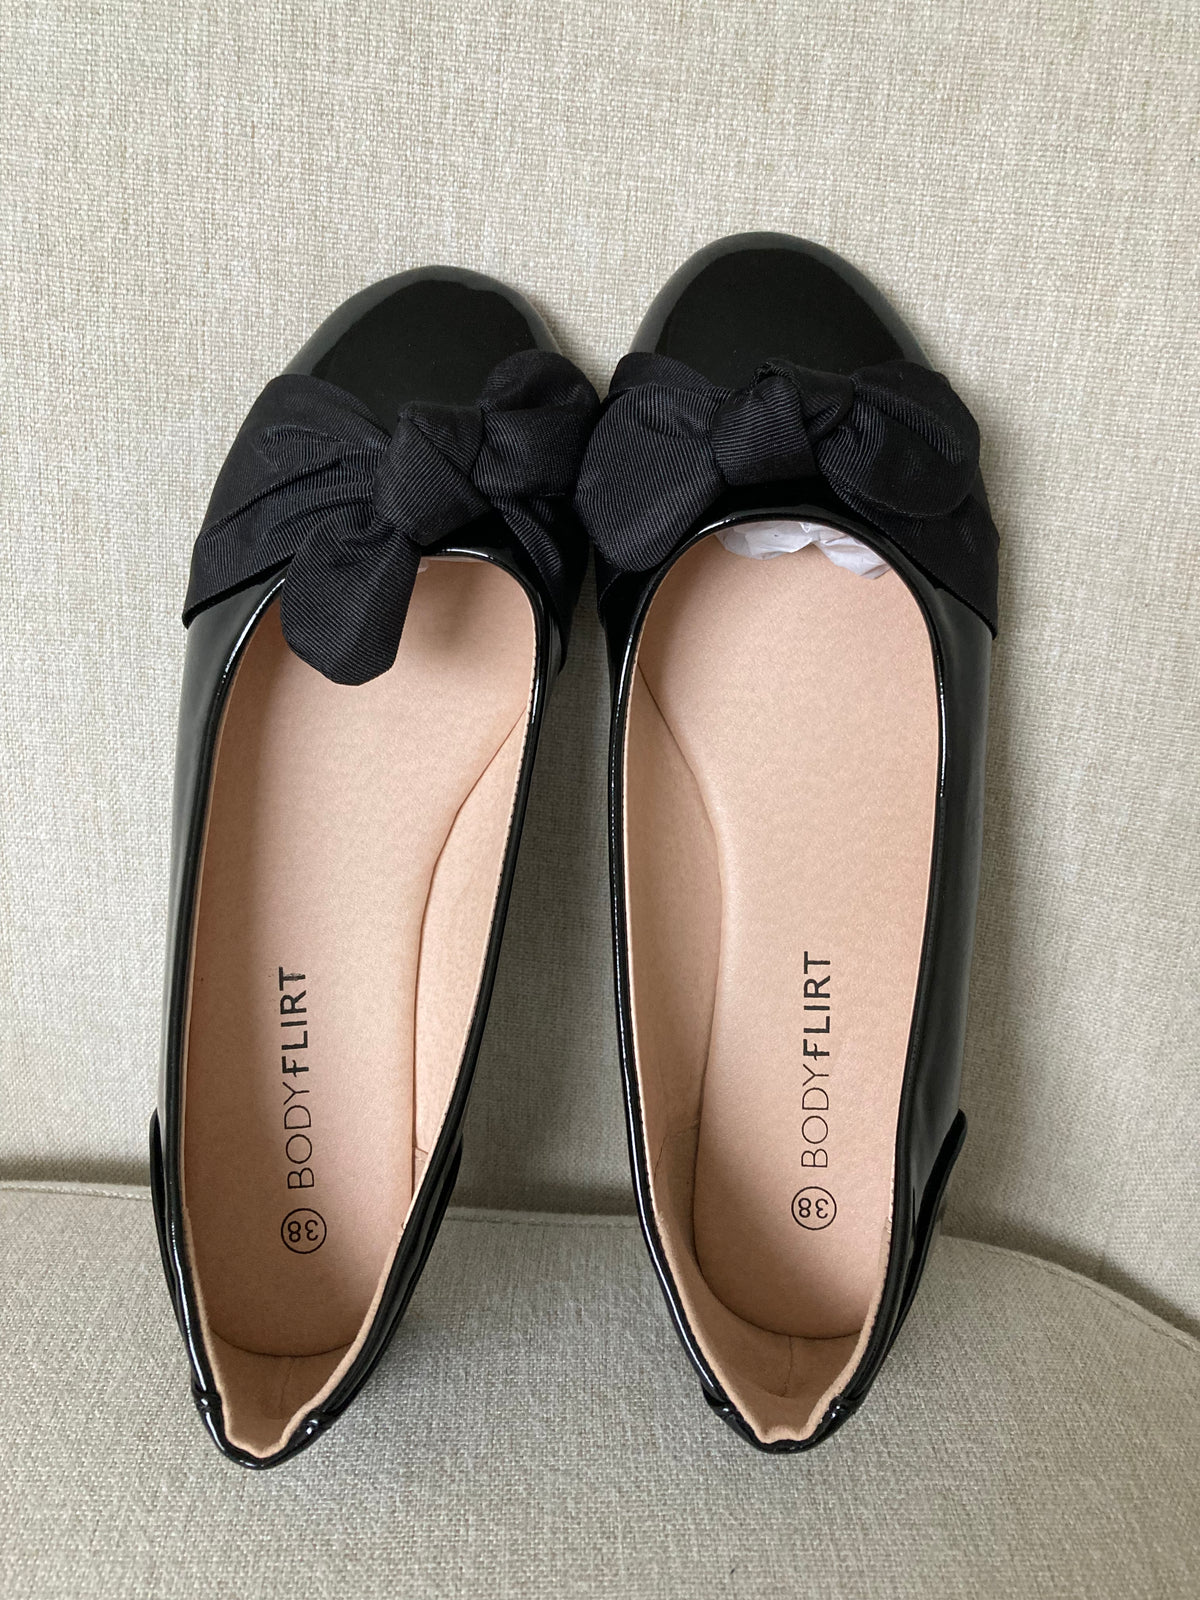 Black flat ballet shoes by Bonprix